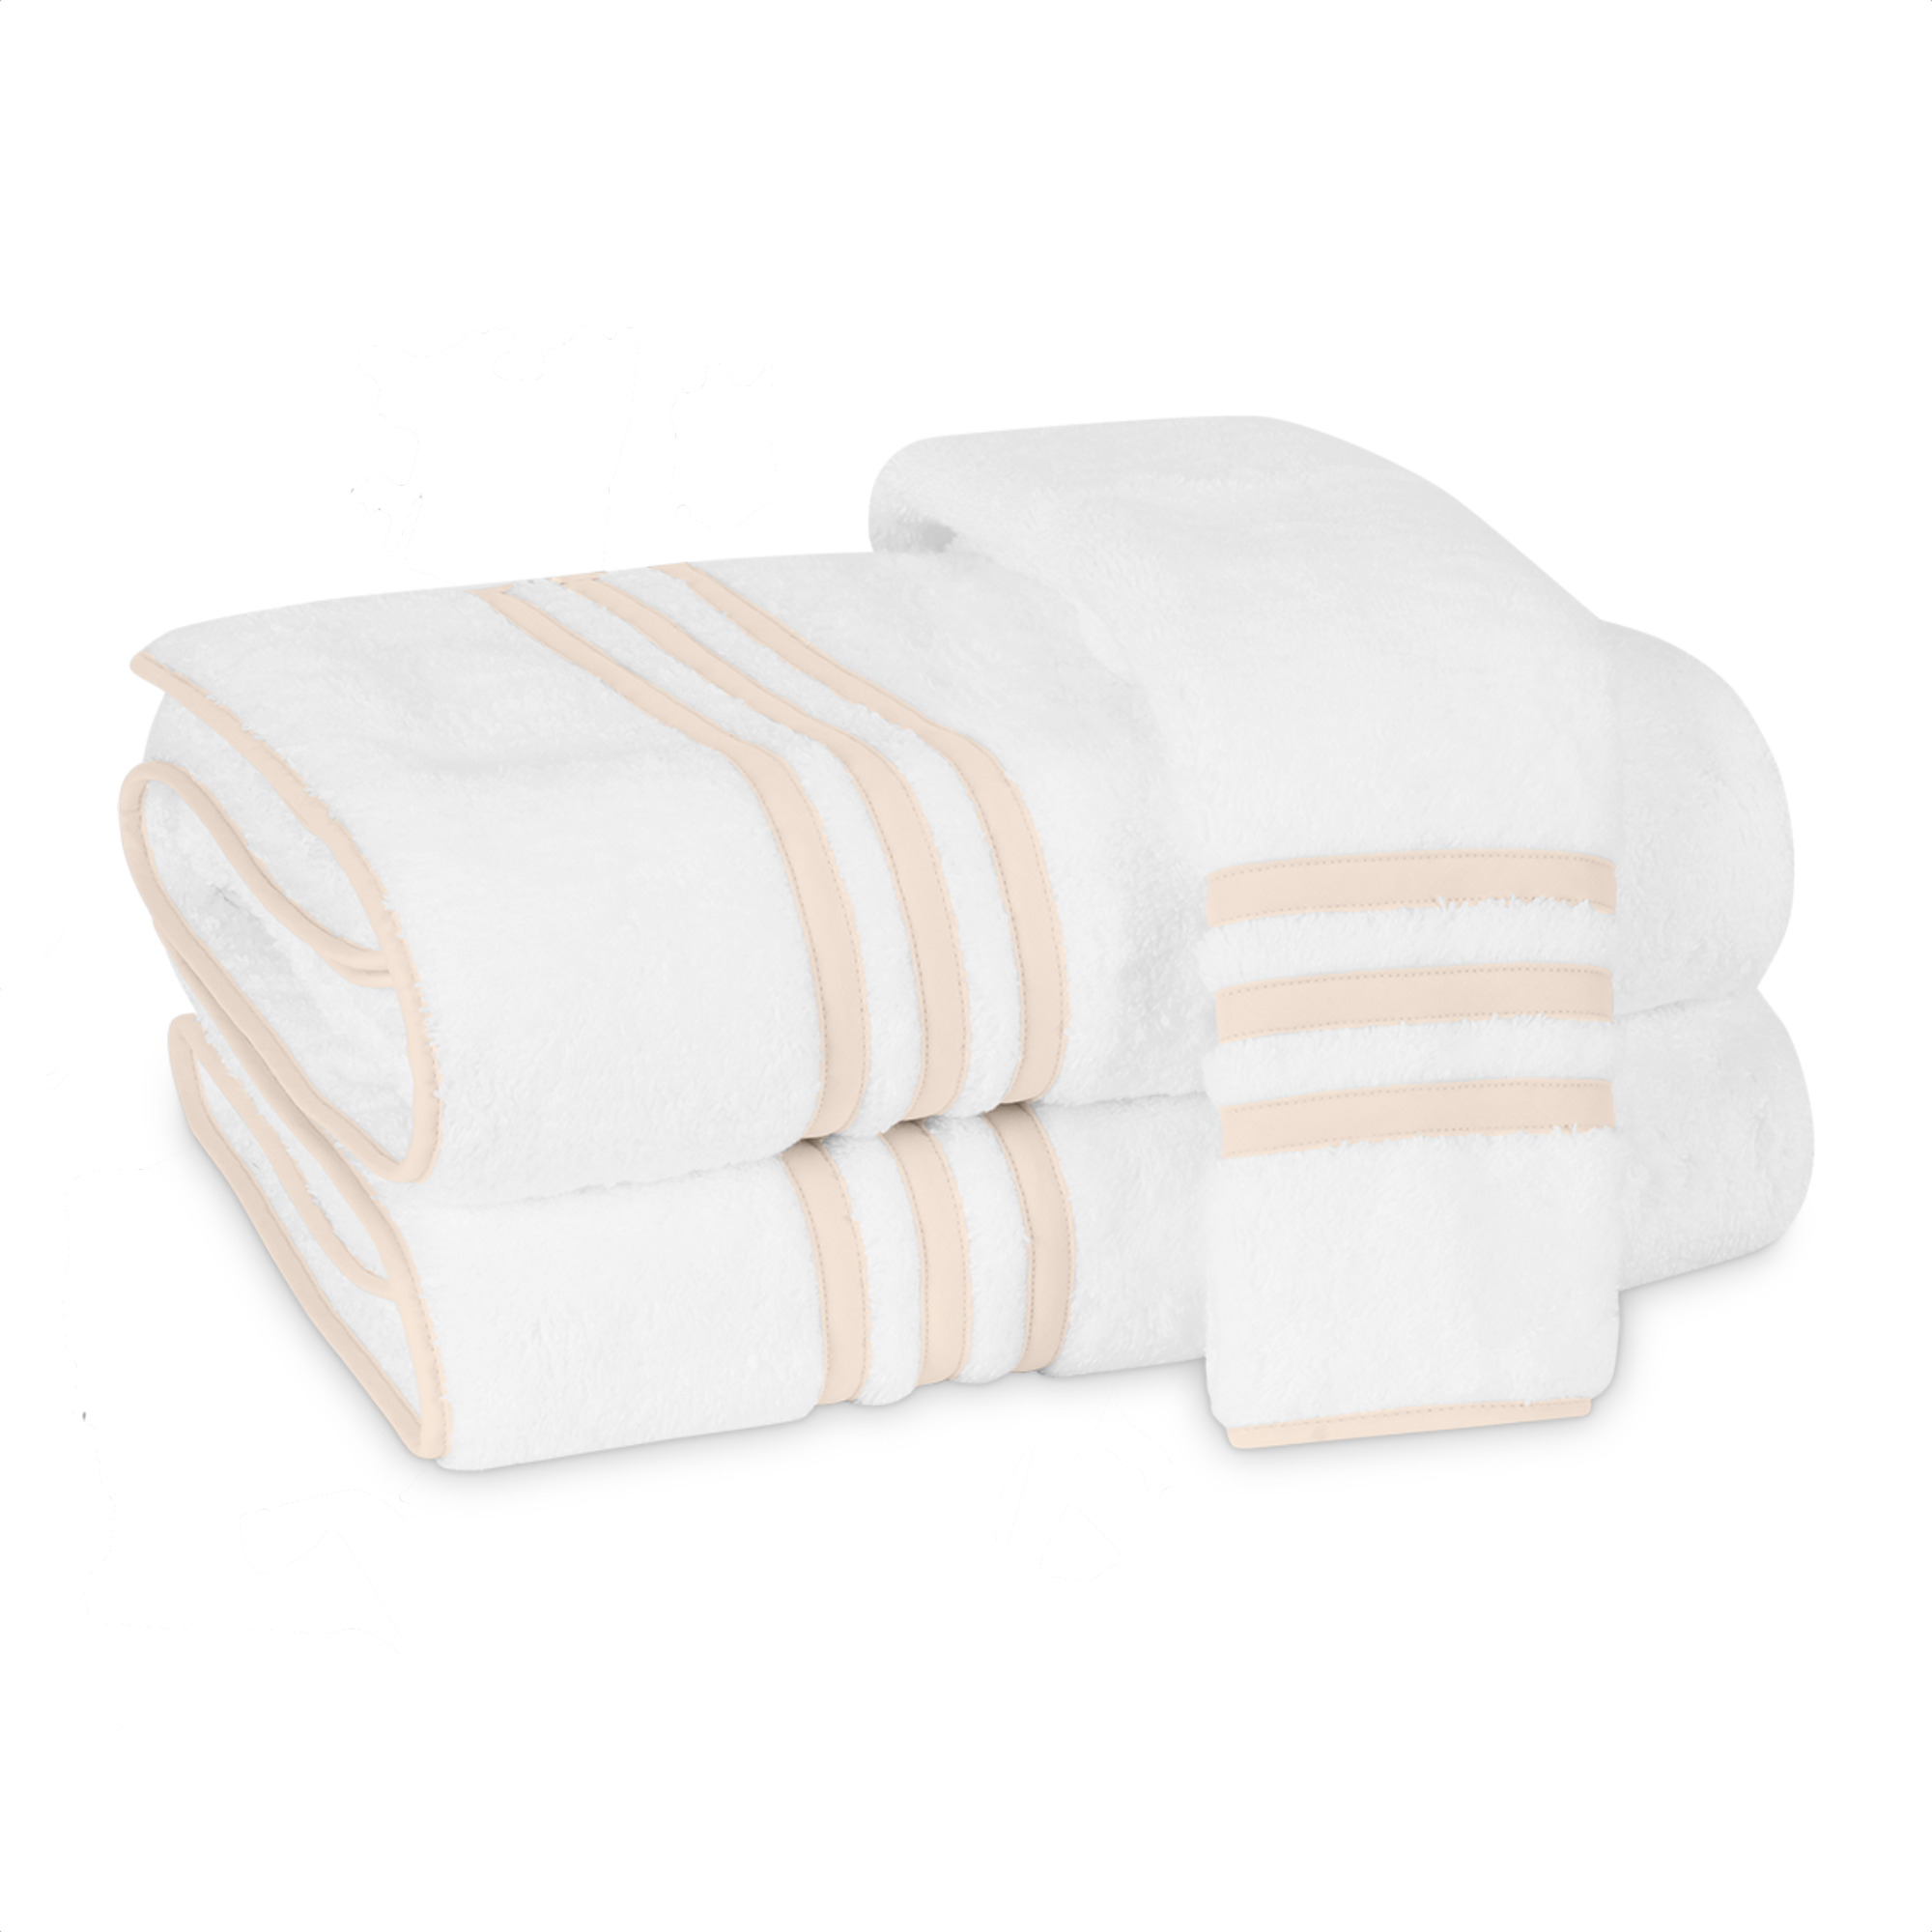 Folded Matouk Newport Bath Towels in Cotton Color